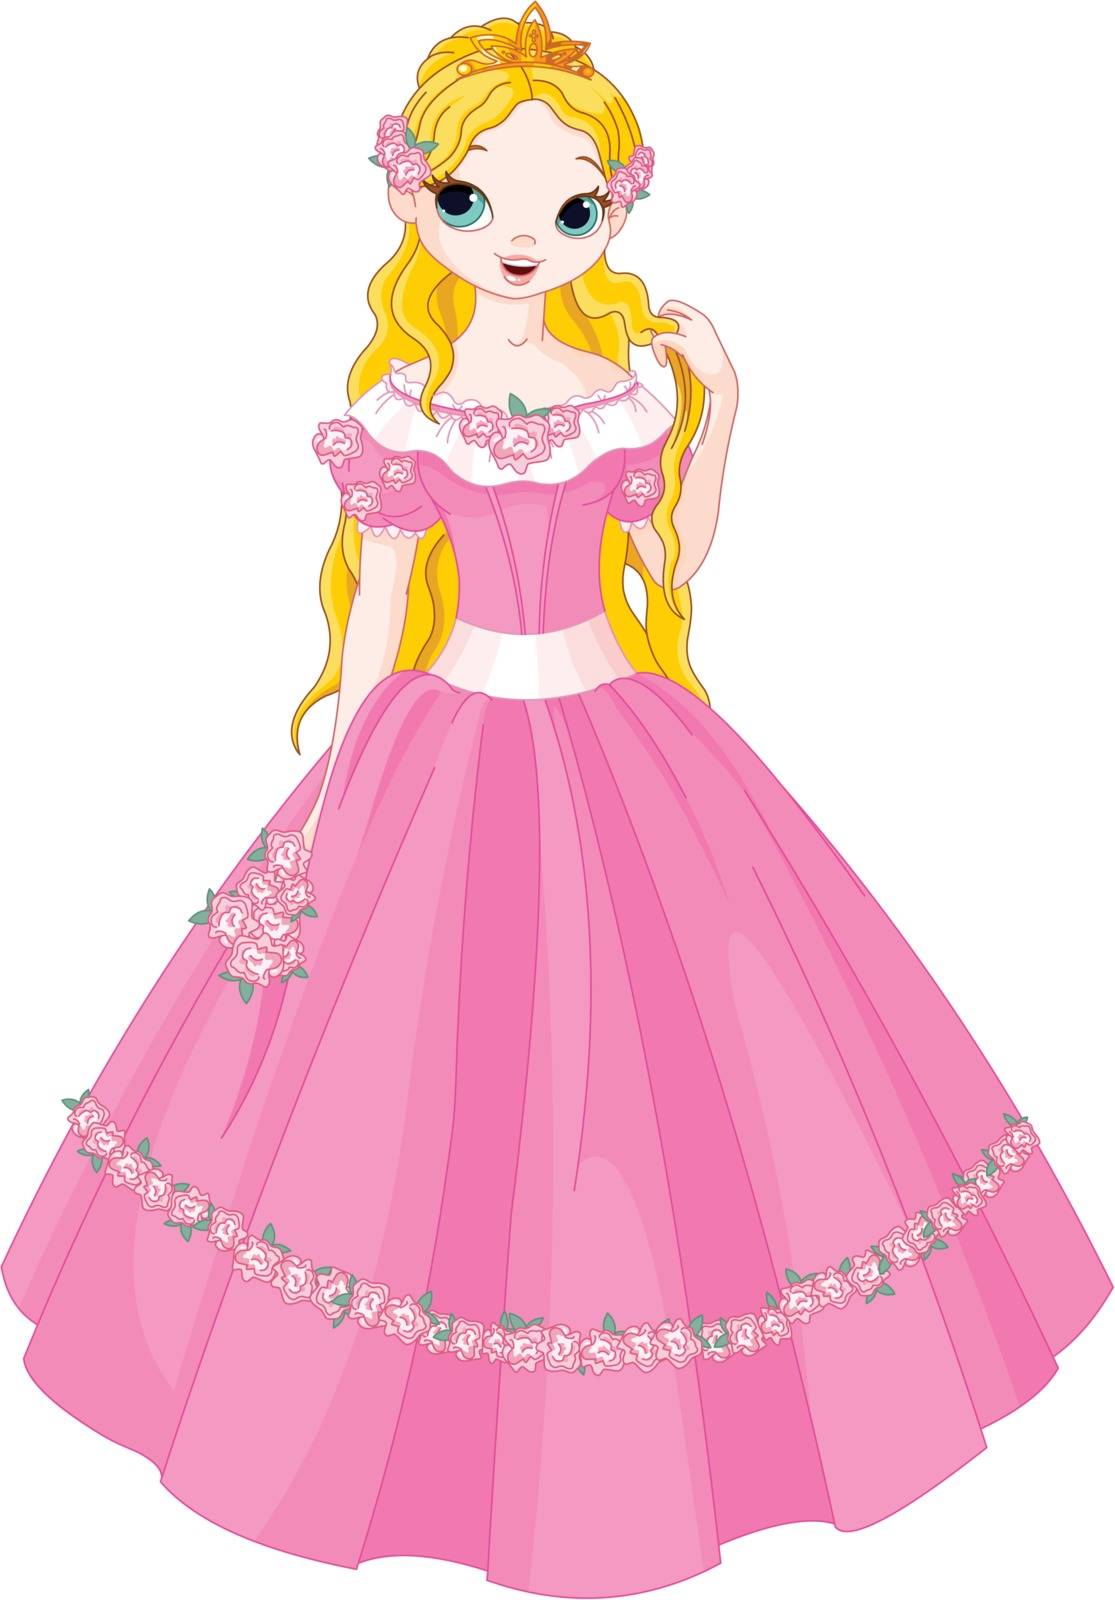 Fairytale  princess by Dazdraperma